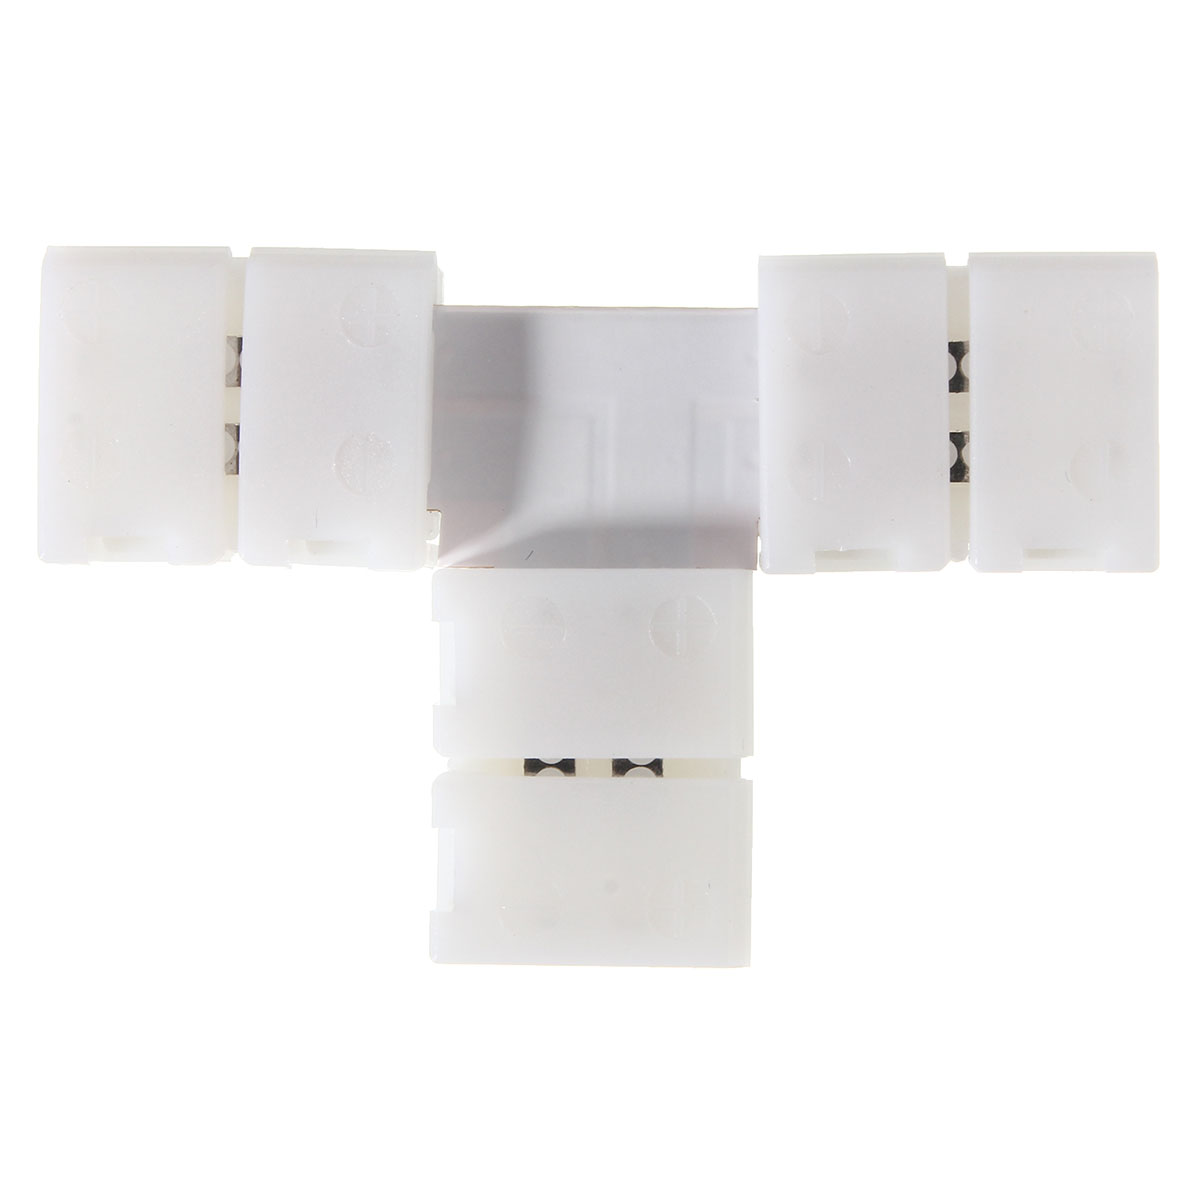 10mm-TL-Shape-2-Pin-5050-PCB-LED-Strip-Corner-Connector-for-Single-Color-Lighting-1087475